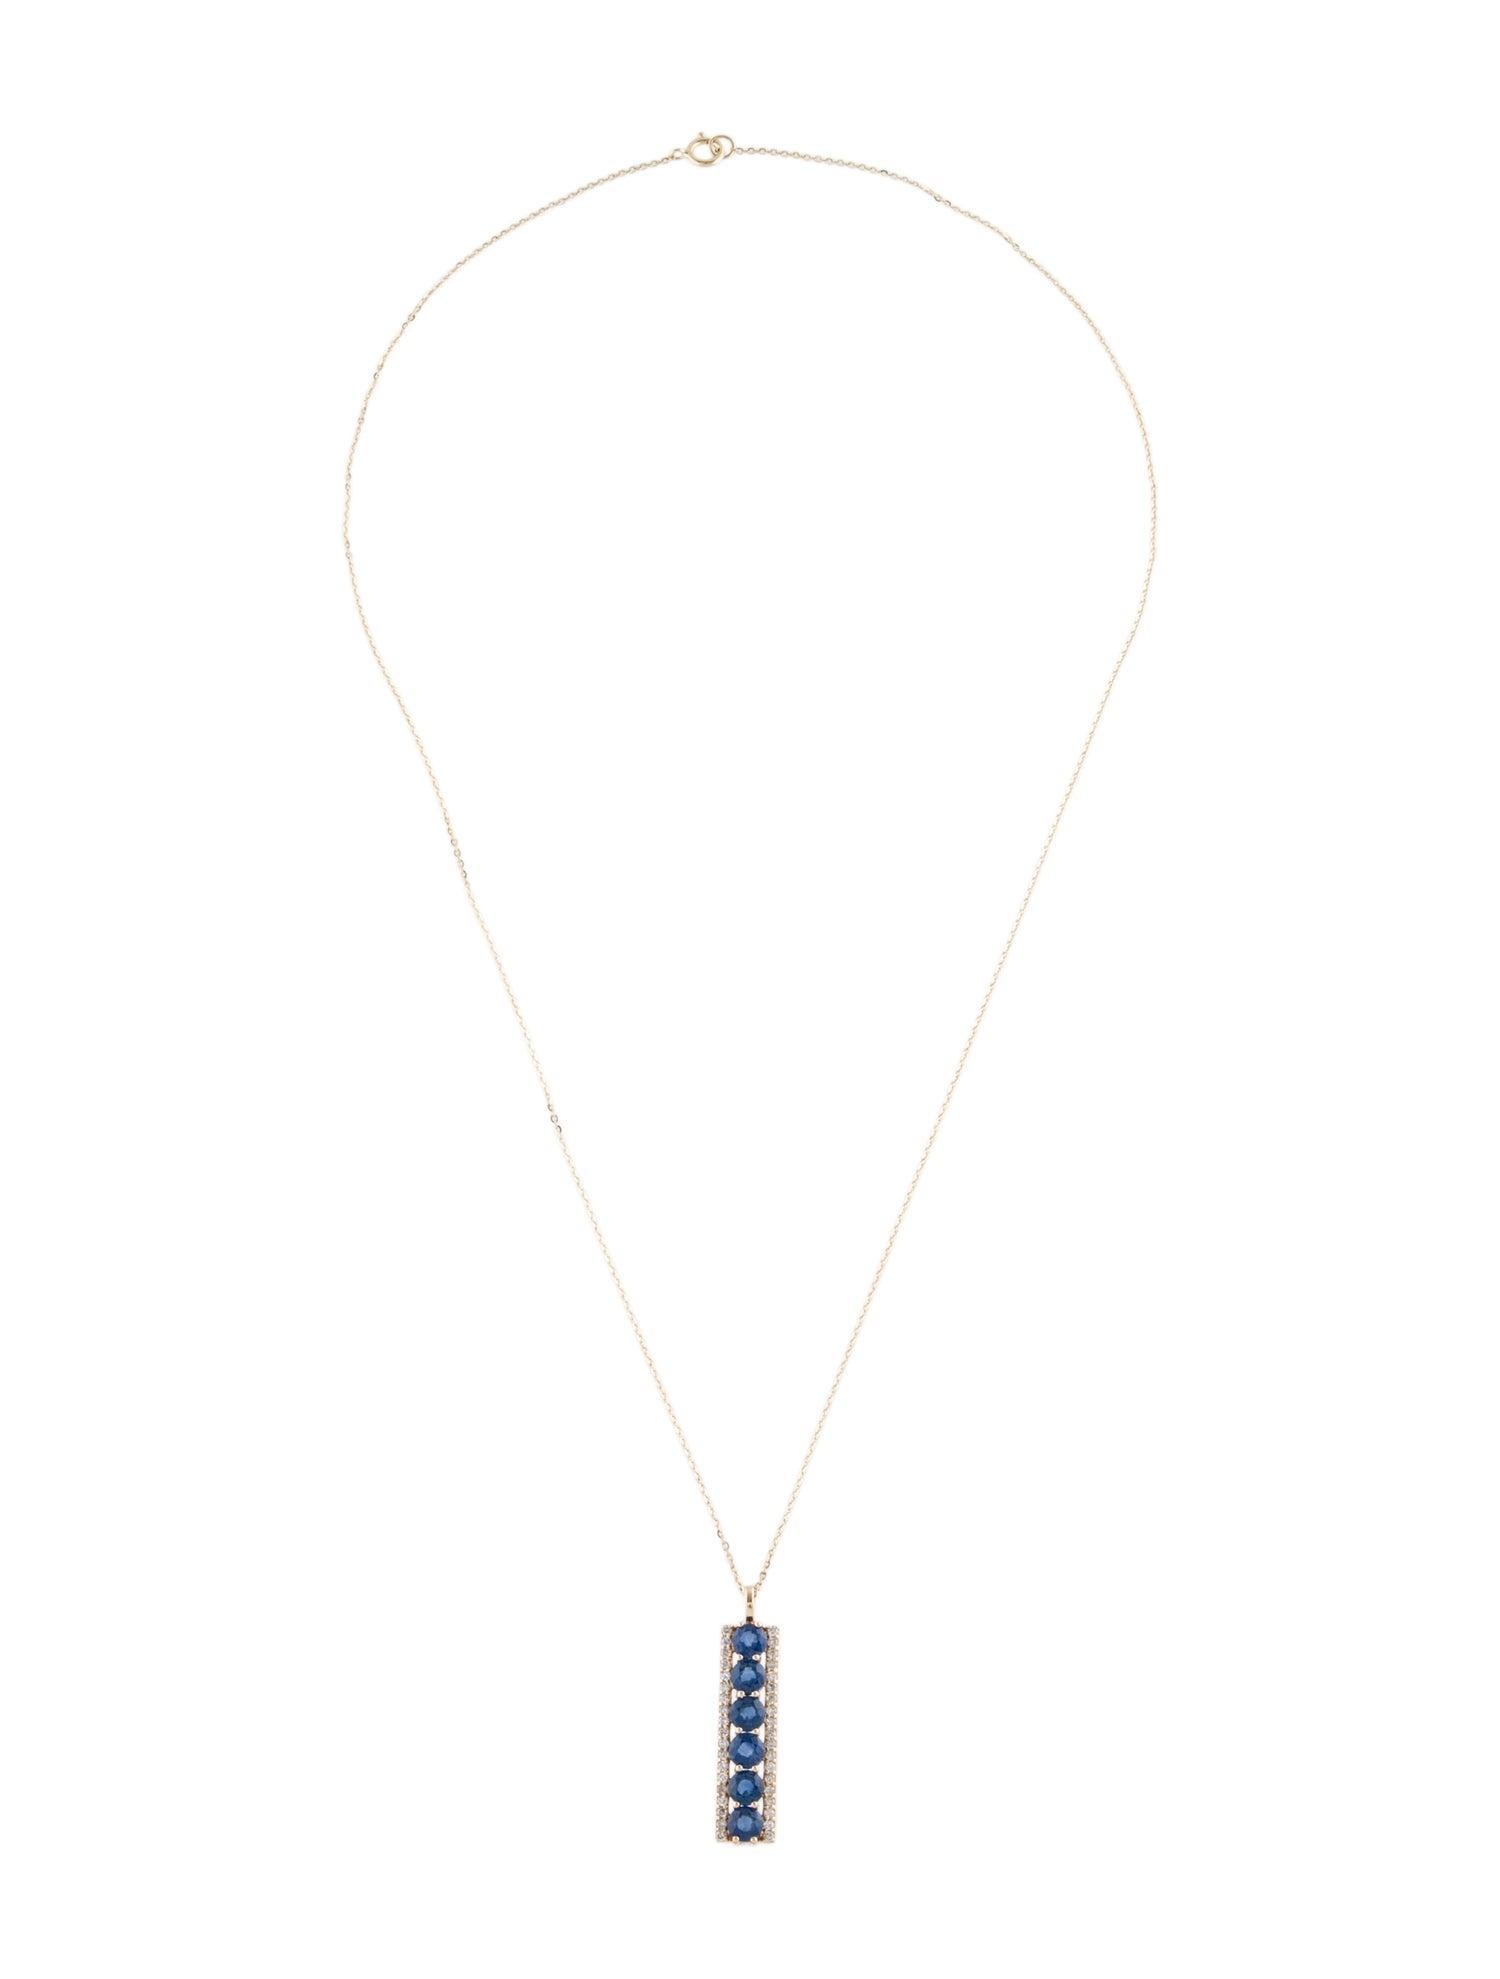 Women's Elegant 14K Sapphire & Diamond Pendant Necklace  1.98ctw Gemstone Sparkle For Sale